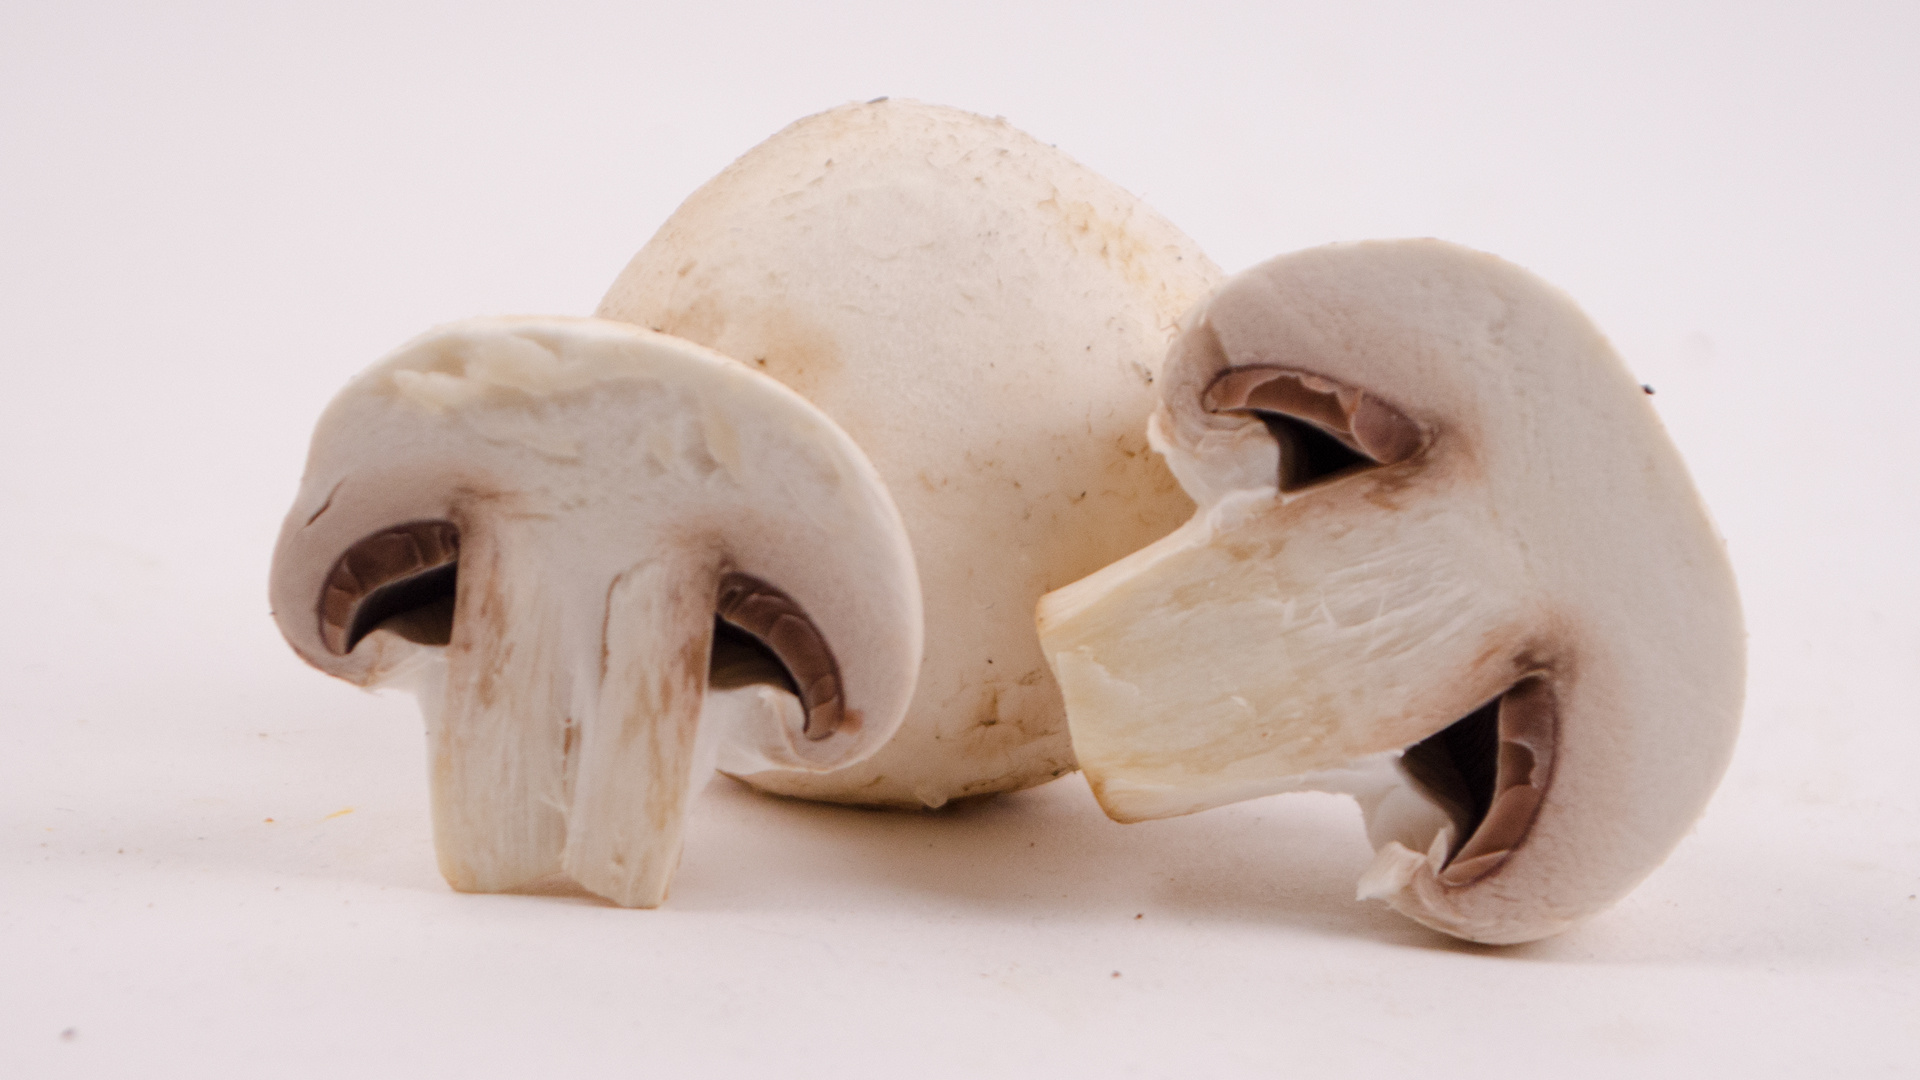 Buy white mushrooms online, Vegan snack option, Convenient and fresh, High-quality produce, 1920x1080 Full HD Desktop